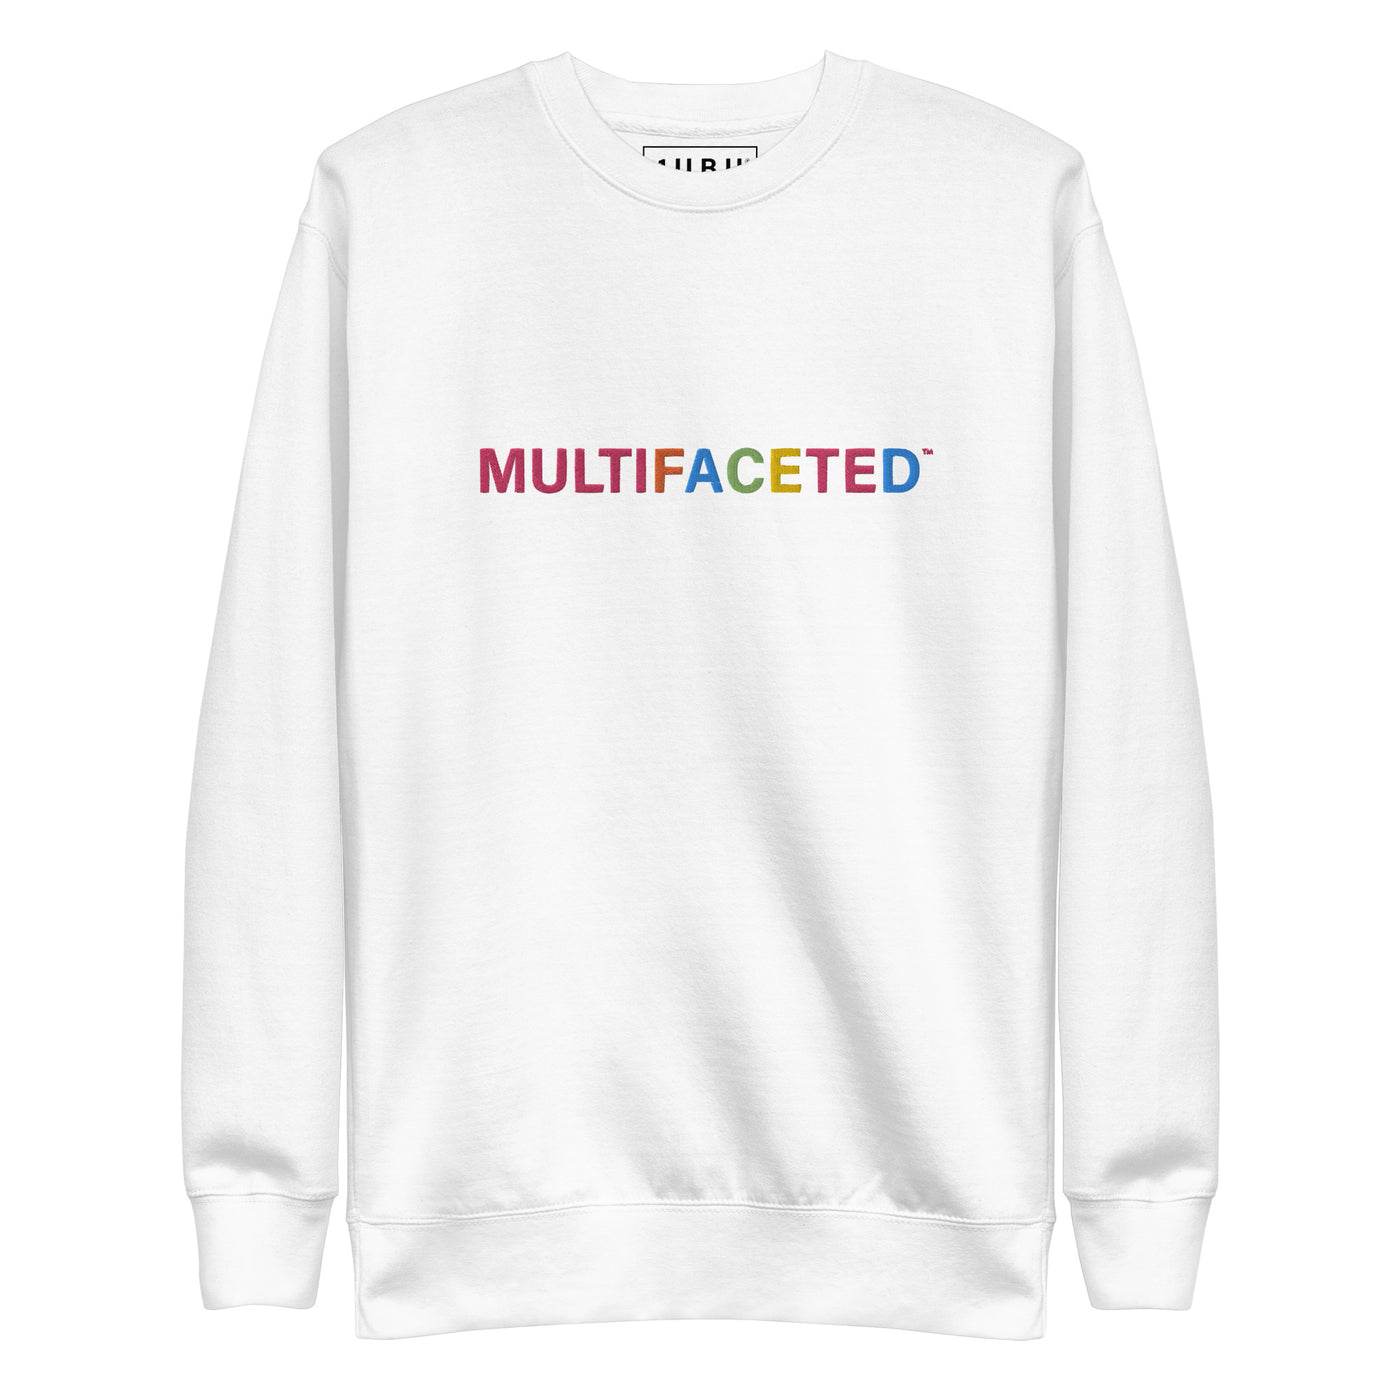 Embroidered crewneck Sweatshirt - Multifaceted